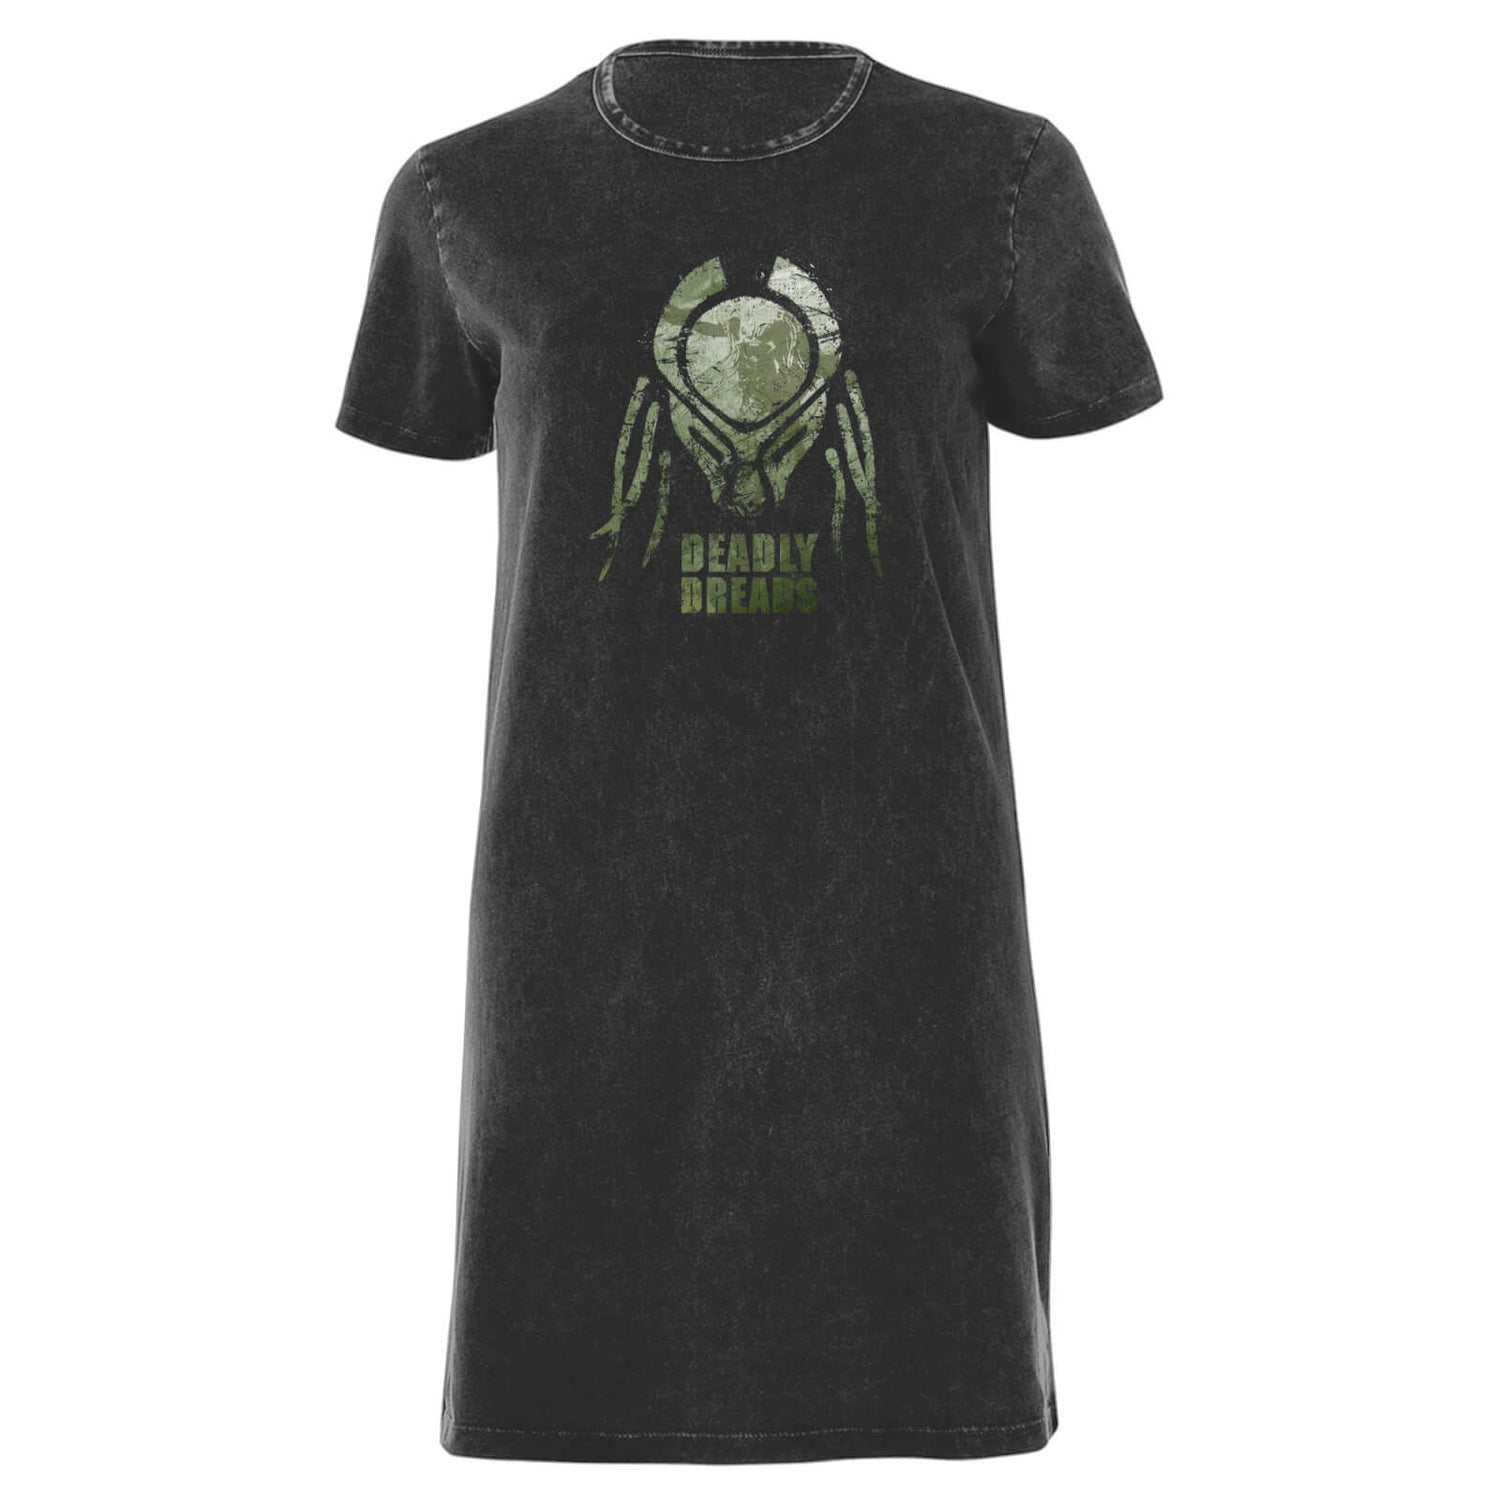 Predator Deadly Dreads Women's T-Shirt Dress - Black Acid Wash